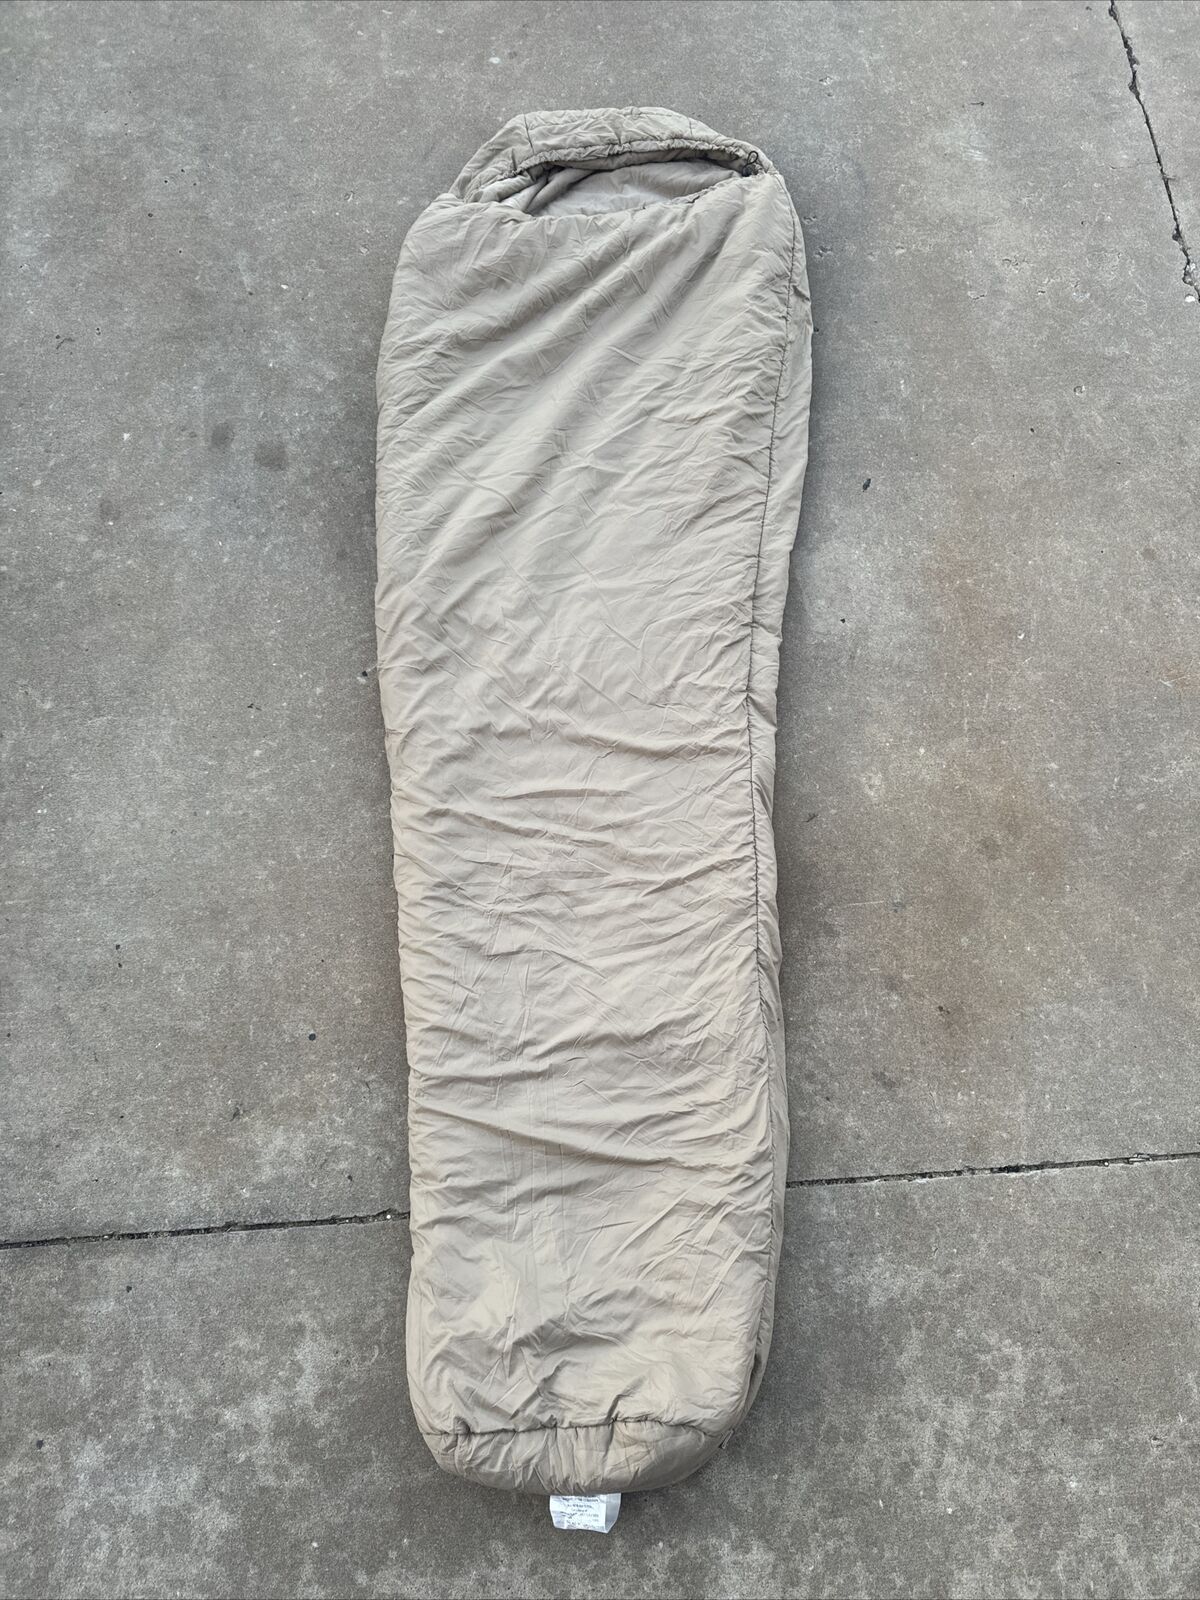 Snugpak Tactical 3 Insulated Sleeping bag with adjustable hood -7 °C